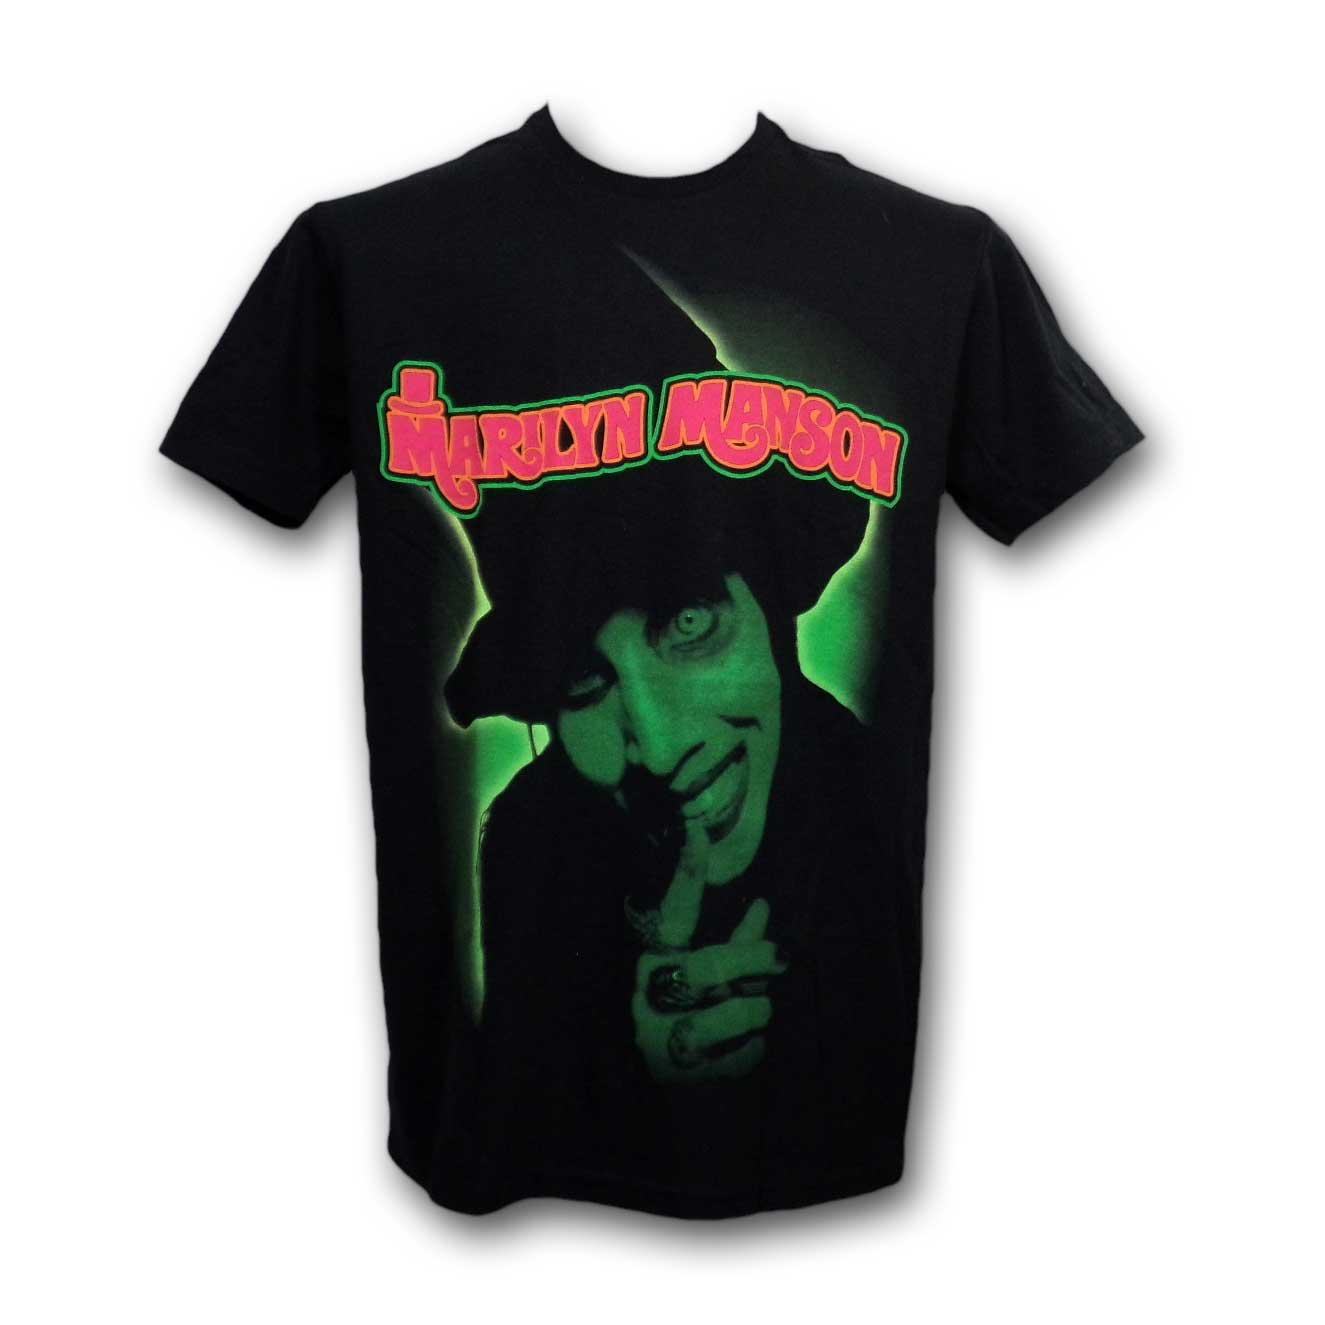 Marilyn Manson tシャツ